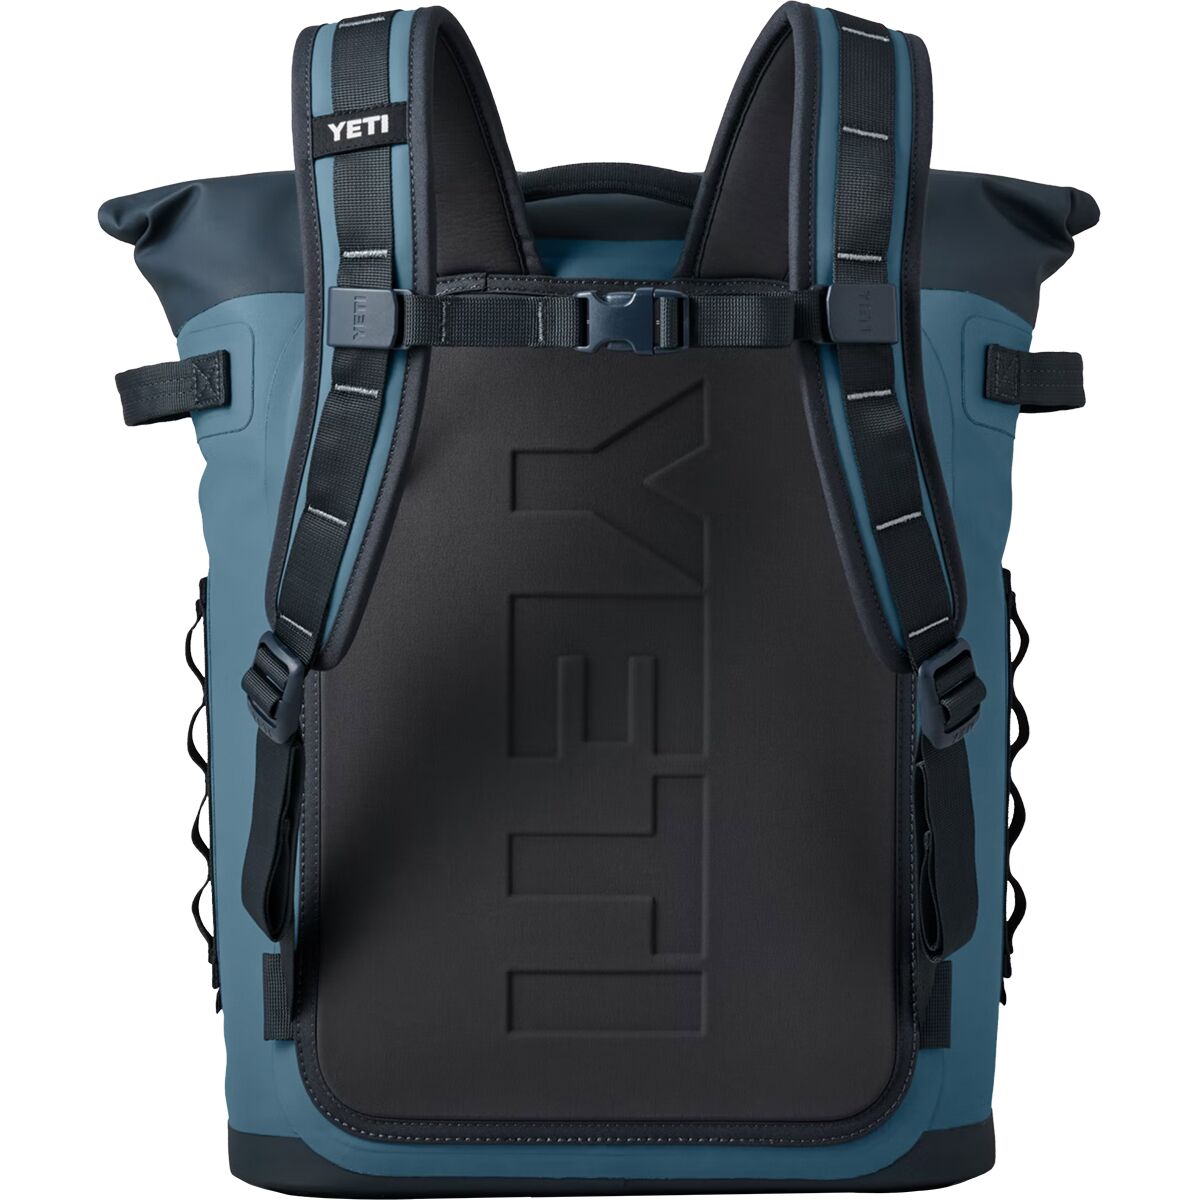 YETI Hopper M20 Backpack Soft Cooler features hands-free cooler straps for  comfort » Gadget Flow